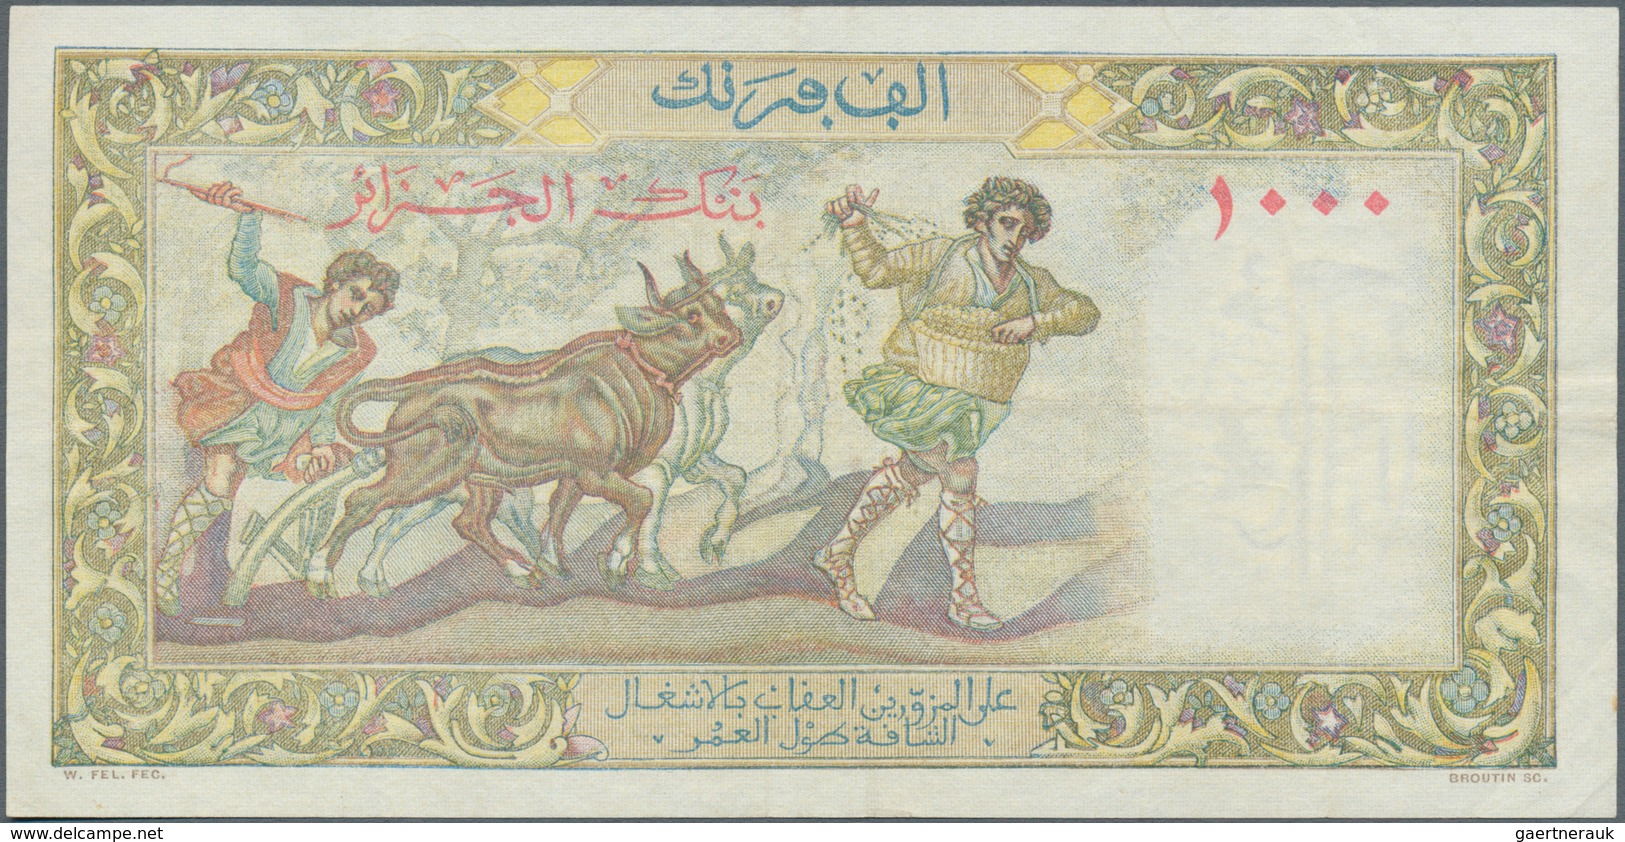 01009 Algeria / Algerien: 1000 Francs 1947 P. 104, Light Folds In Paper, No Holes, Still Nice Colors And S - Argelia